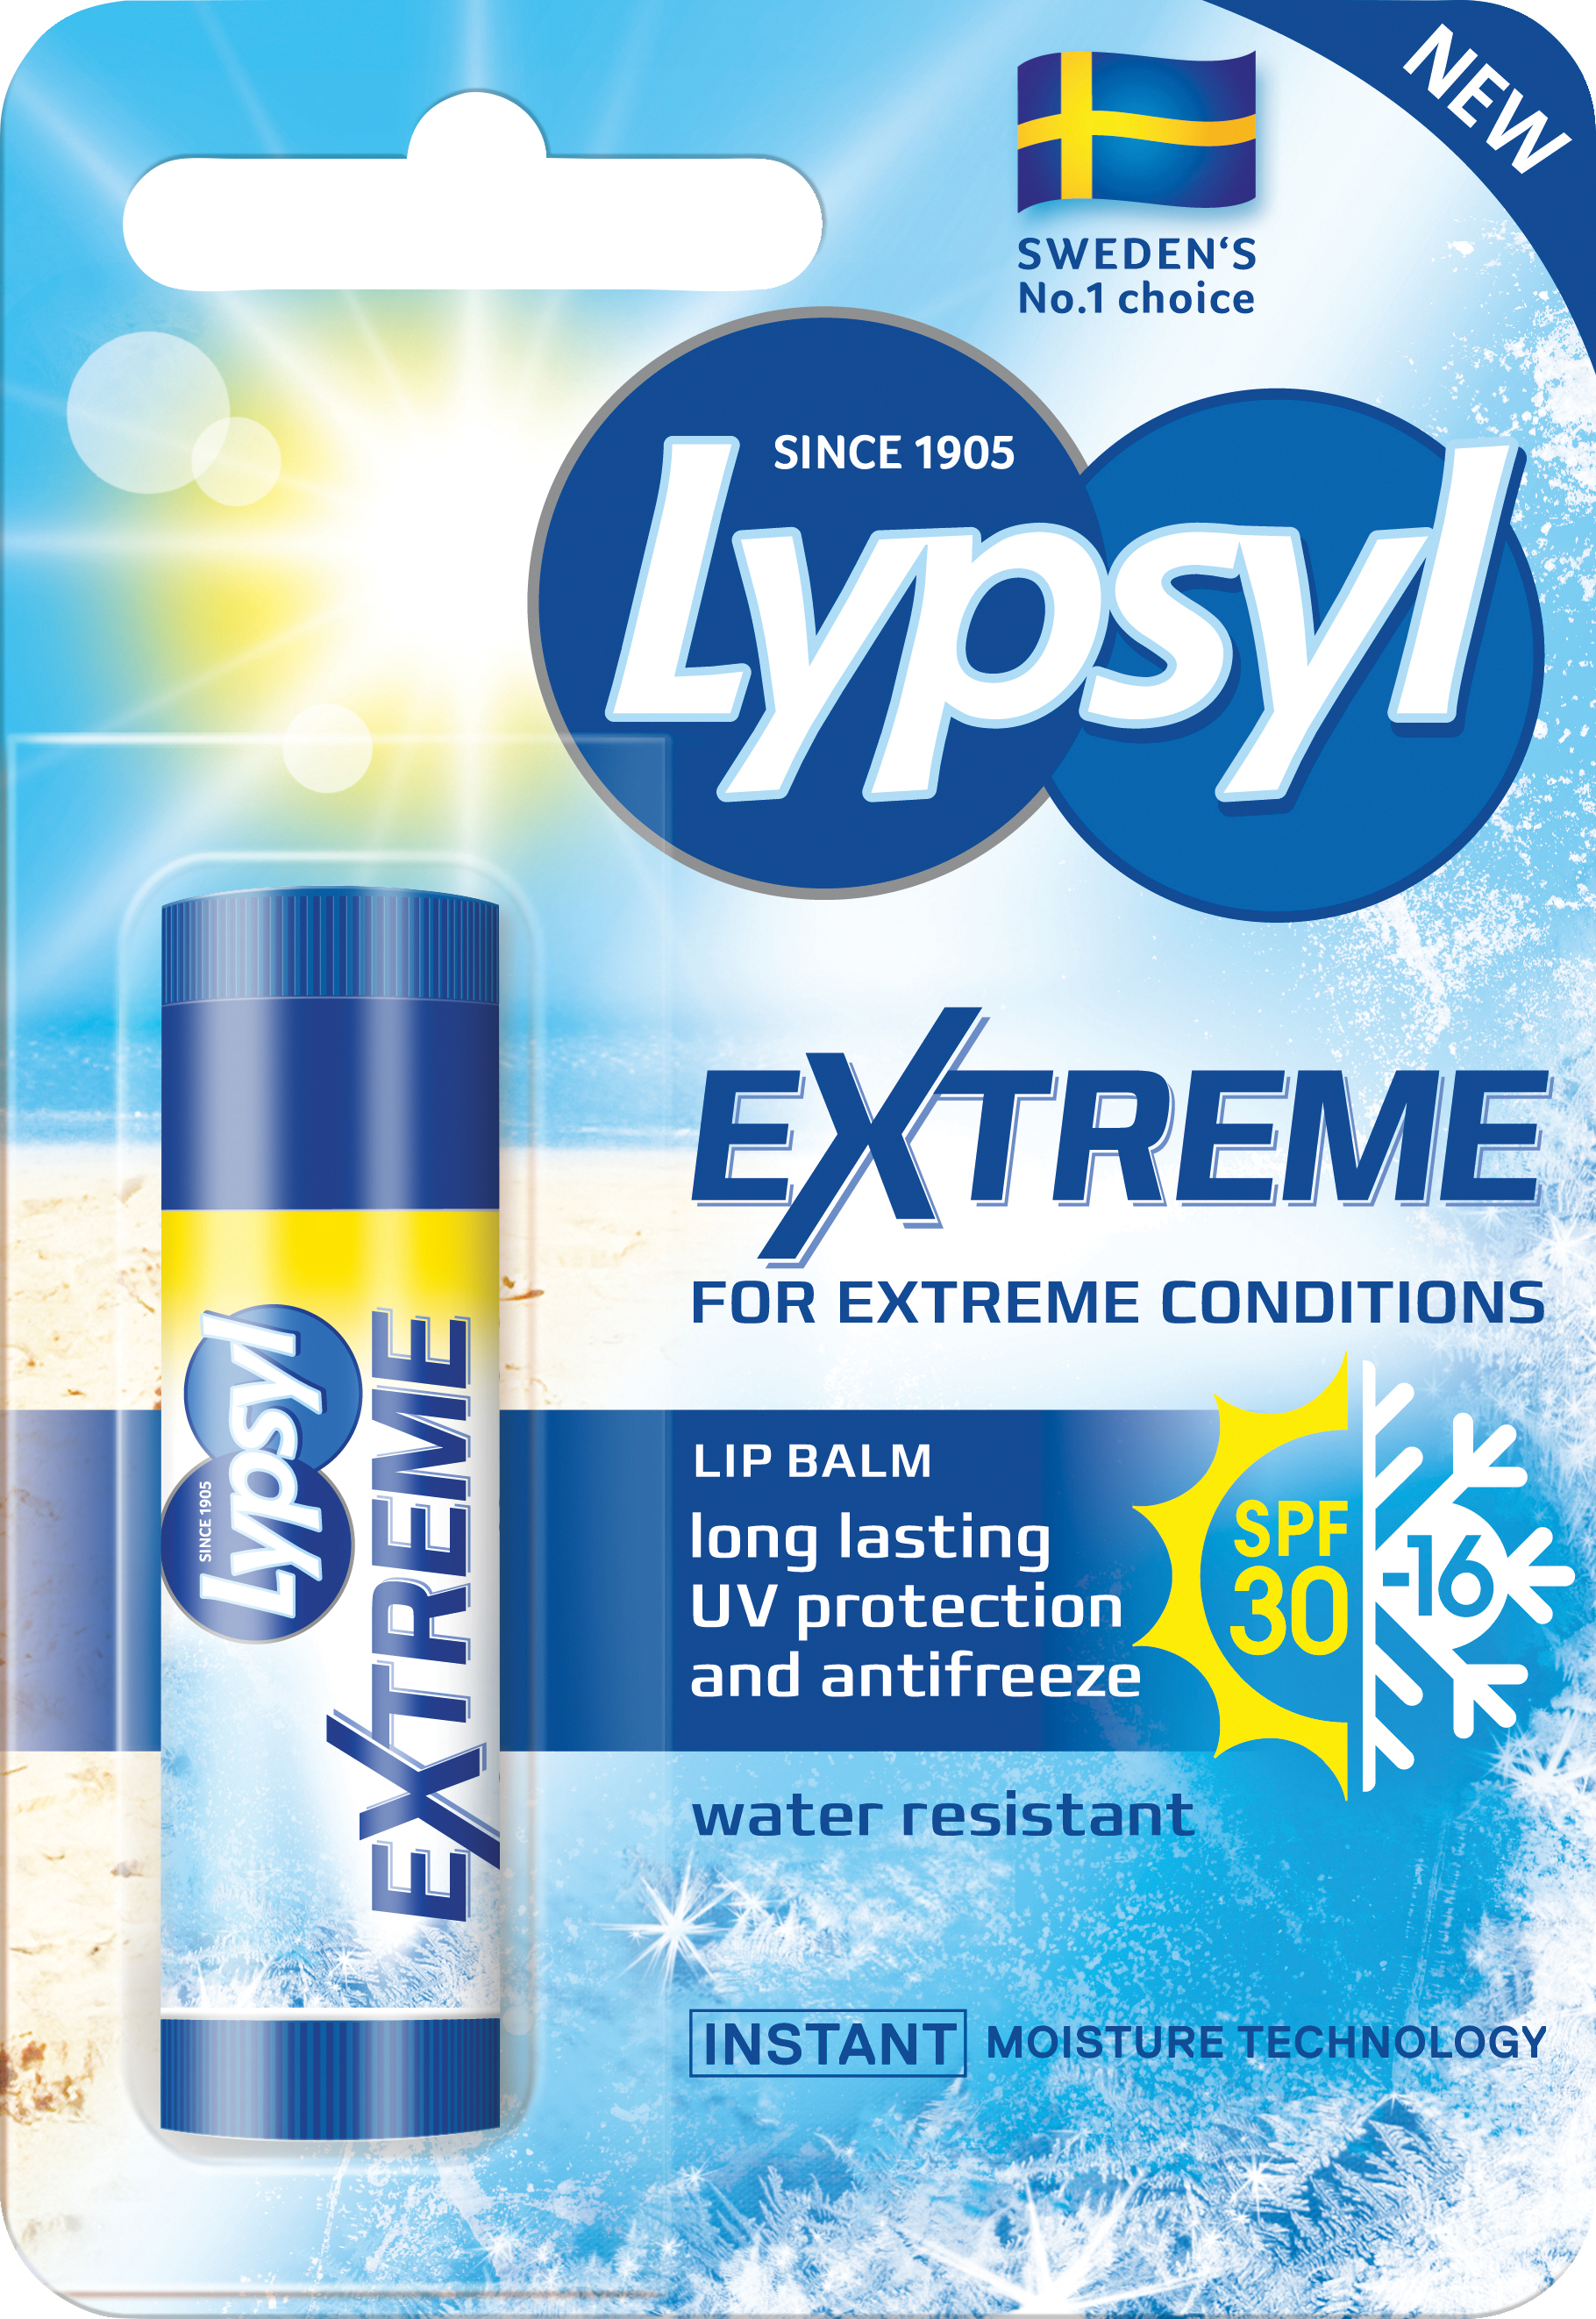 Lypsyl Extreme Spf 30